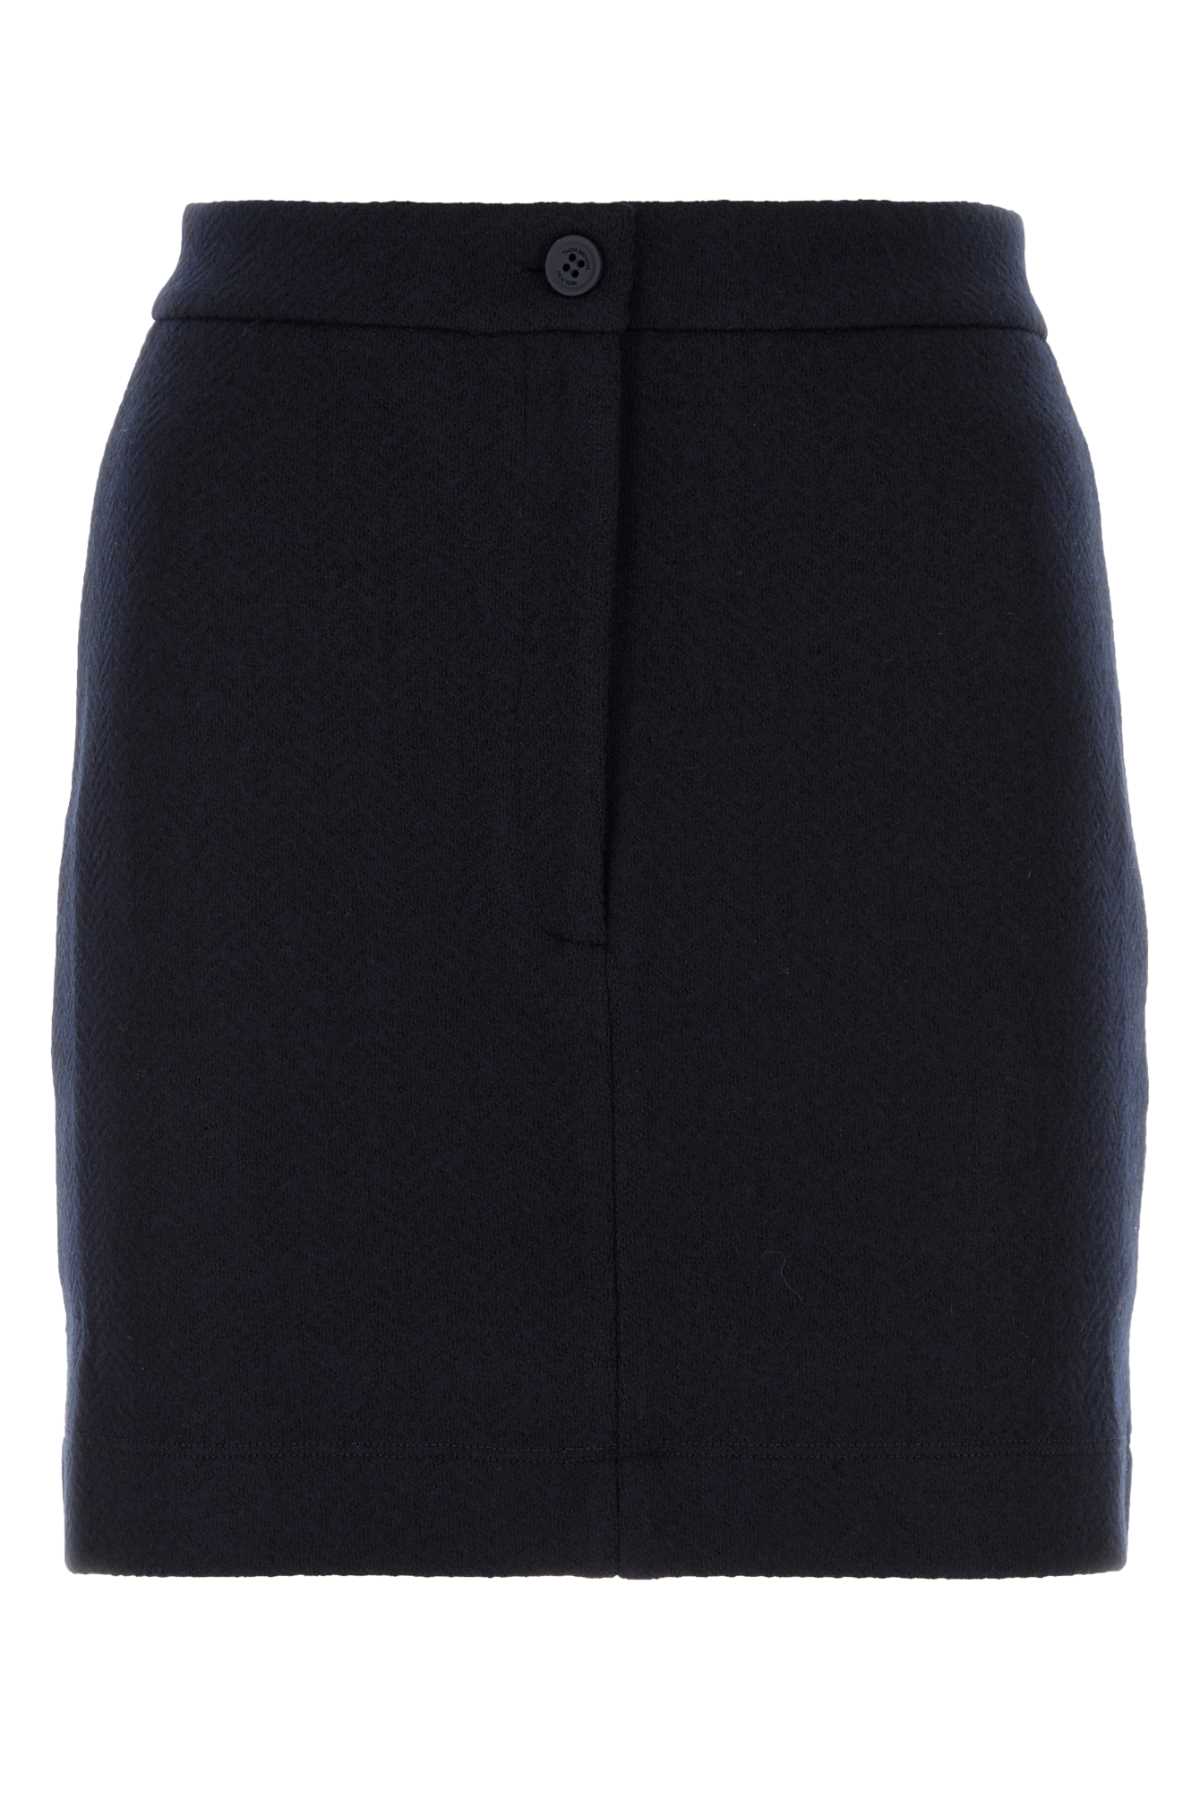 Shop Thom Browne Navy Blue Cotton Blend Mini Skirt